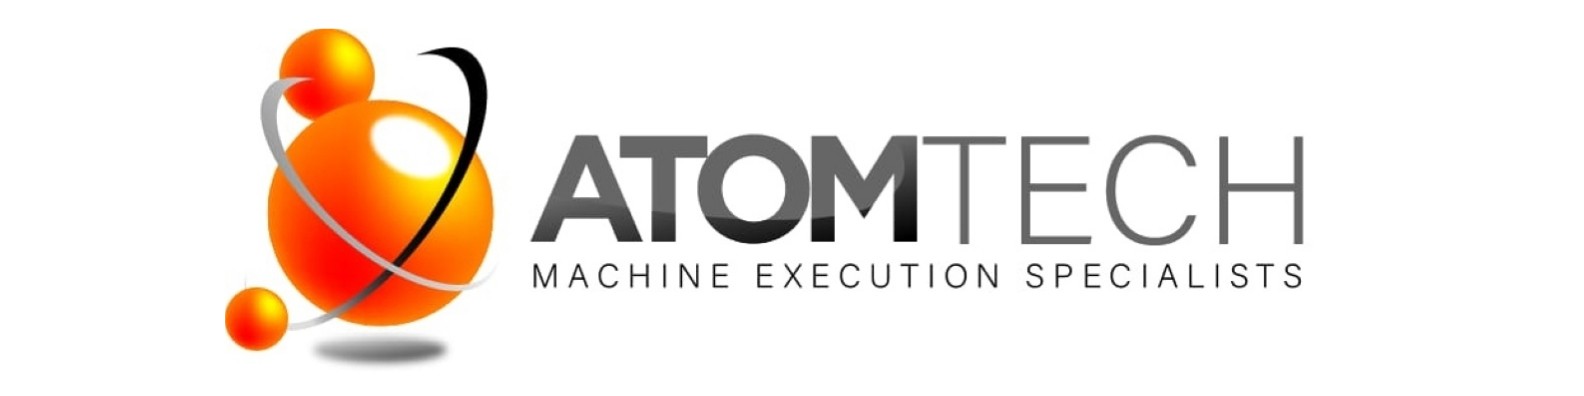 atom tech logo-1